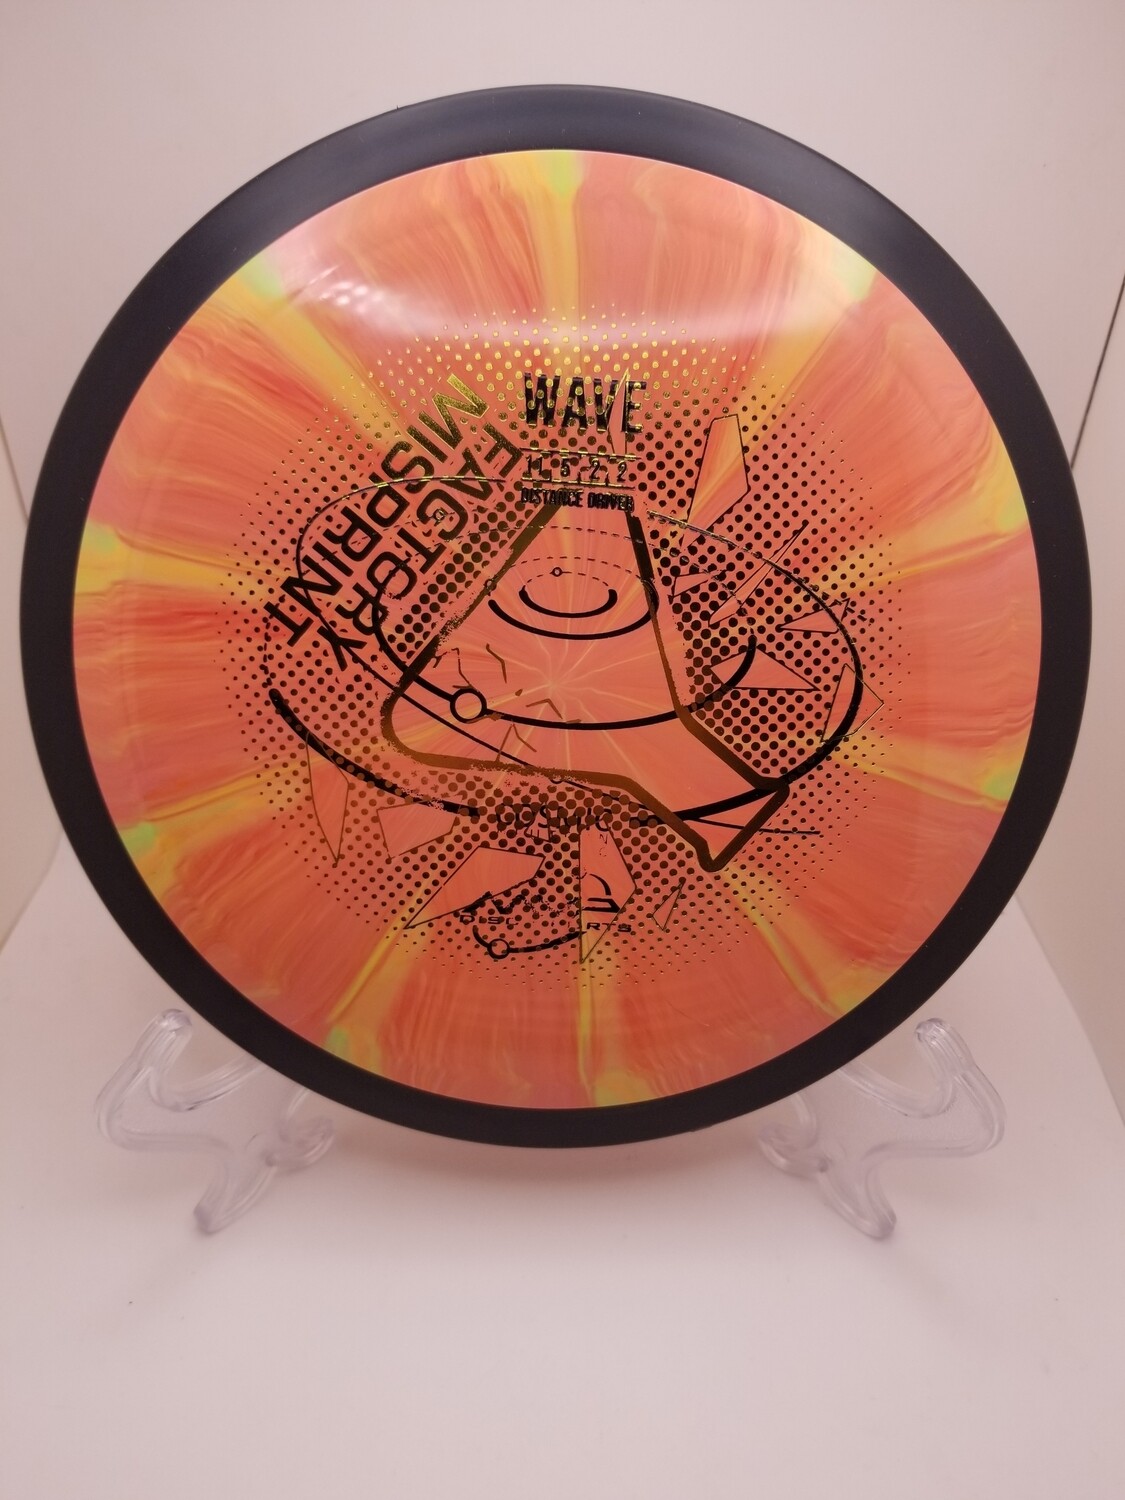 MVP Discs Misprint Wave Peach Swirl Cosmic Neutron Stamped 172g.